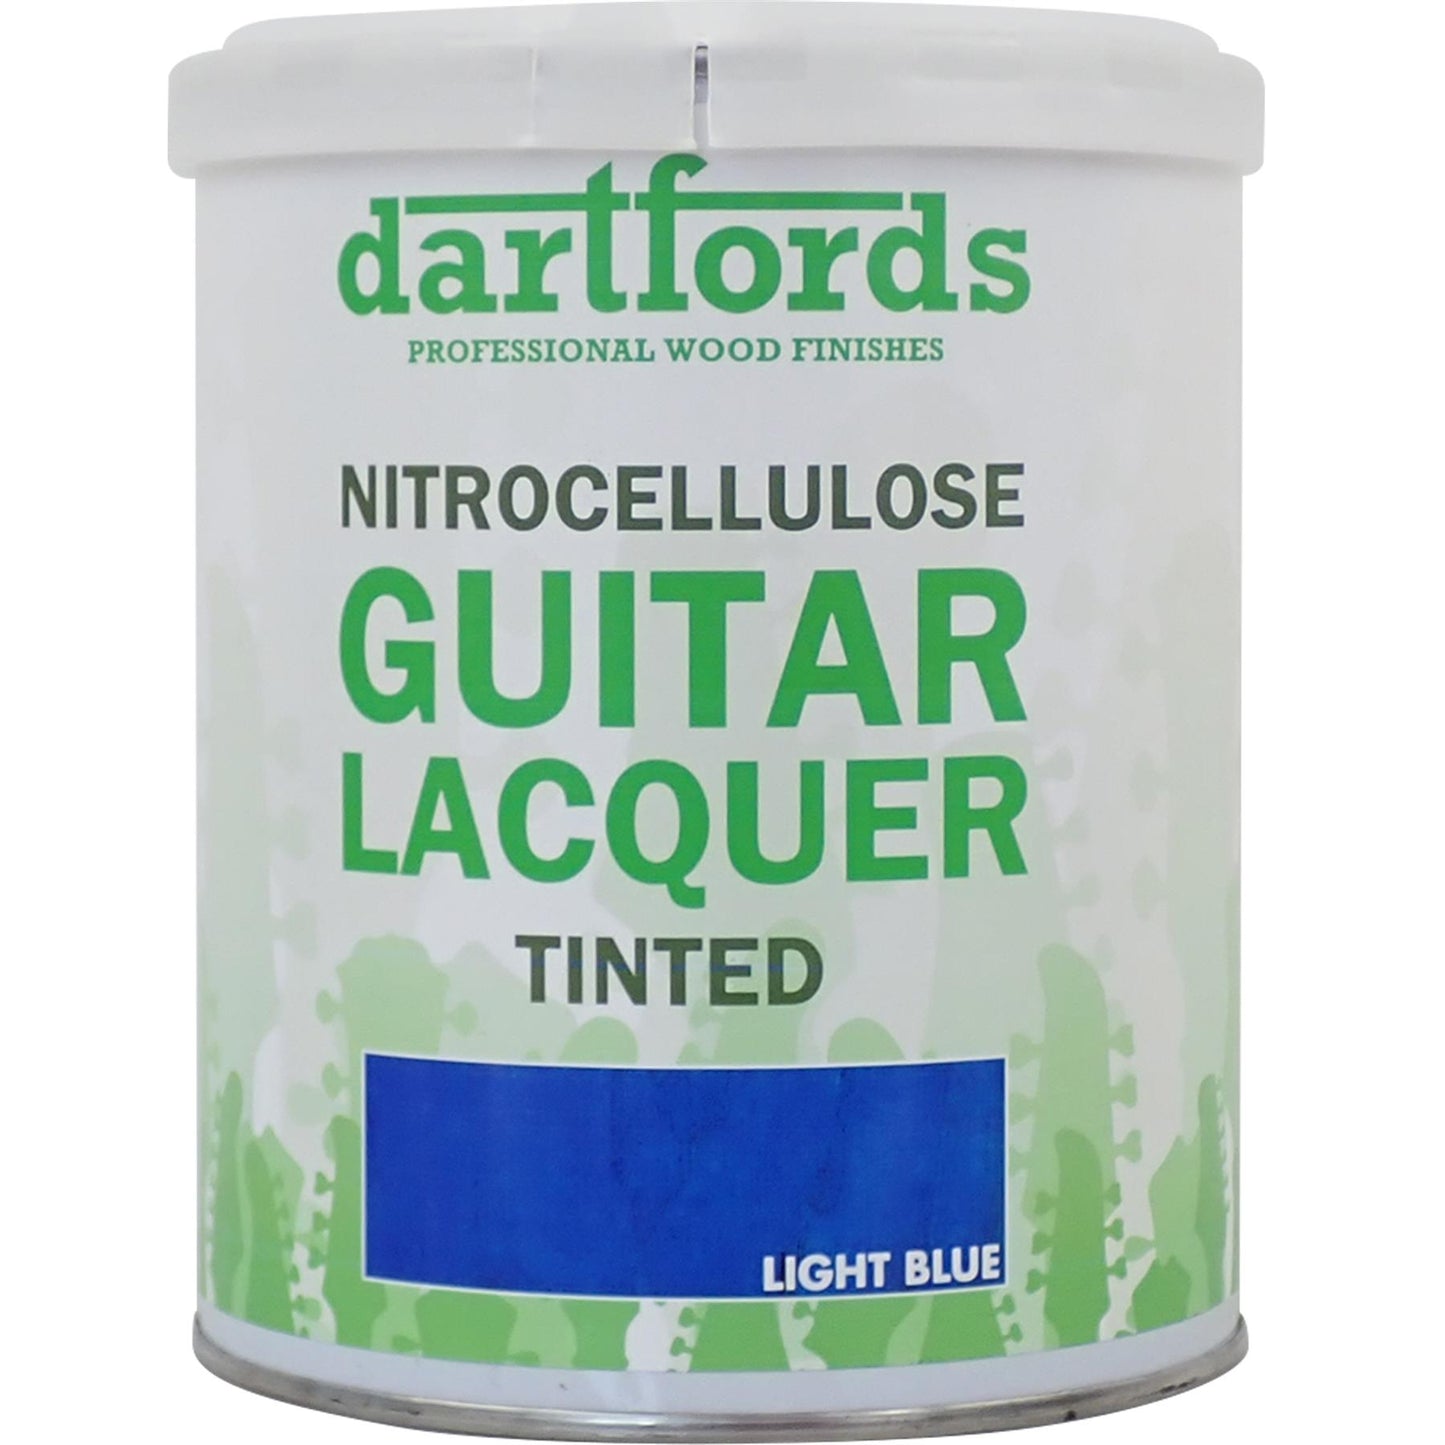 dartfords Light Blue Nitrocellulose Guitar Lacquer - 1 litre Tin